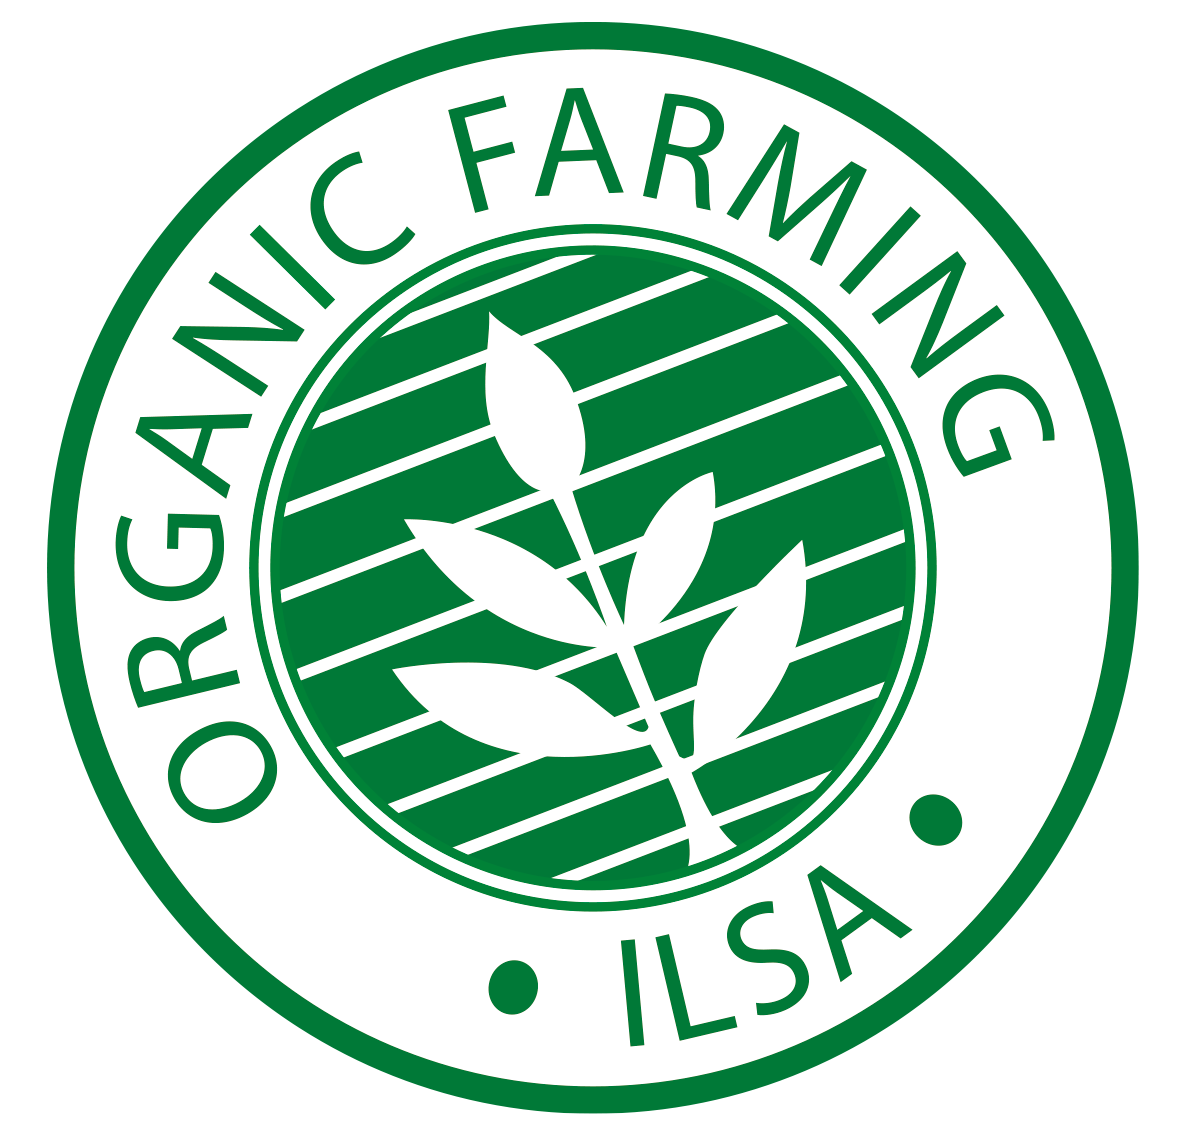 Allowed in organic farming